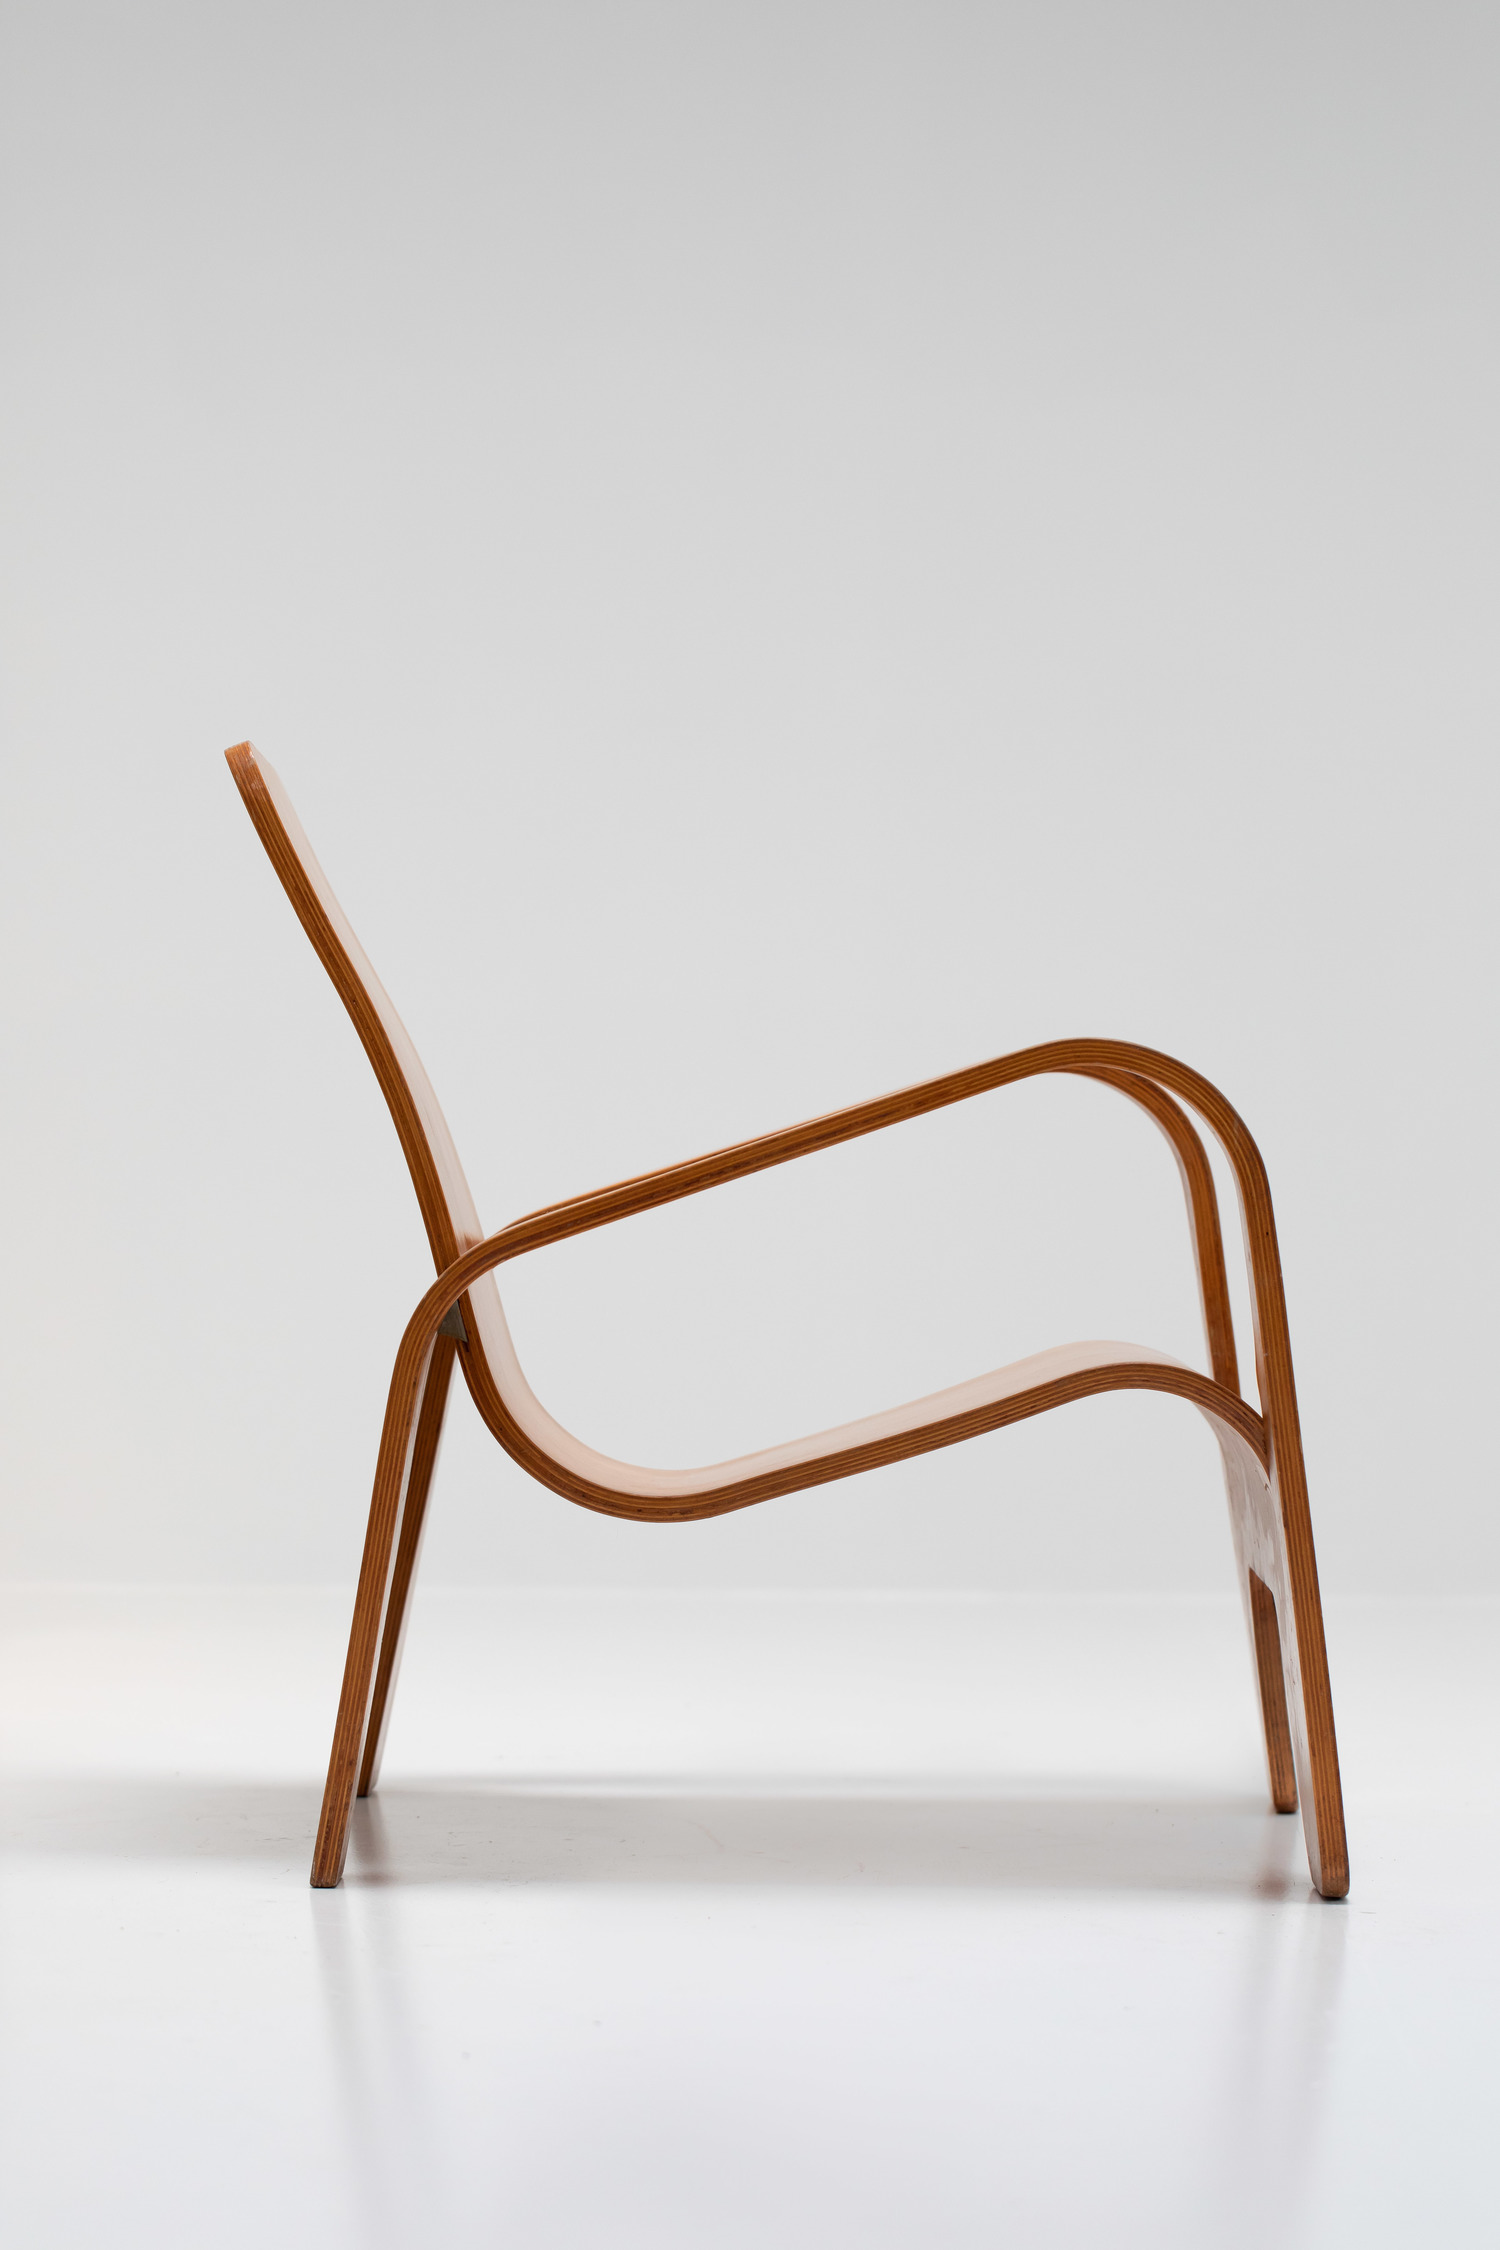 LAWO chair by Han Pieck 1946